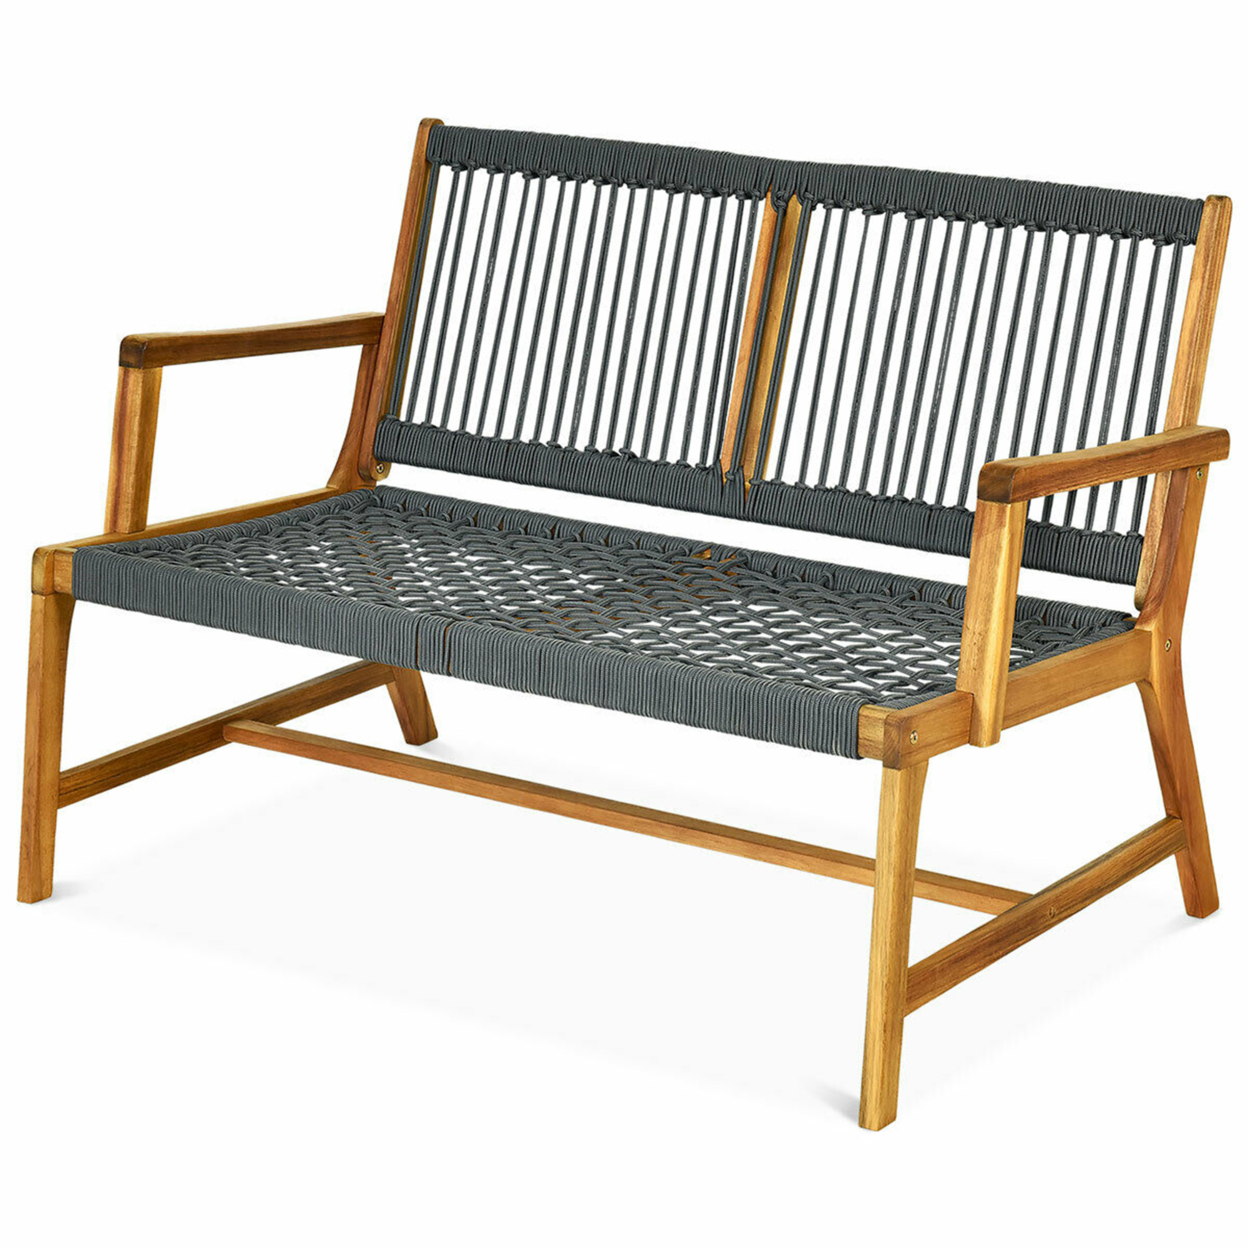 Wooden Rope Bench Loveseat Patio Garden Outdoor W/ Armrest & Backrest